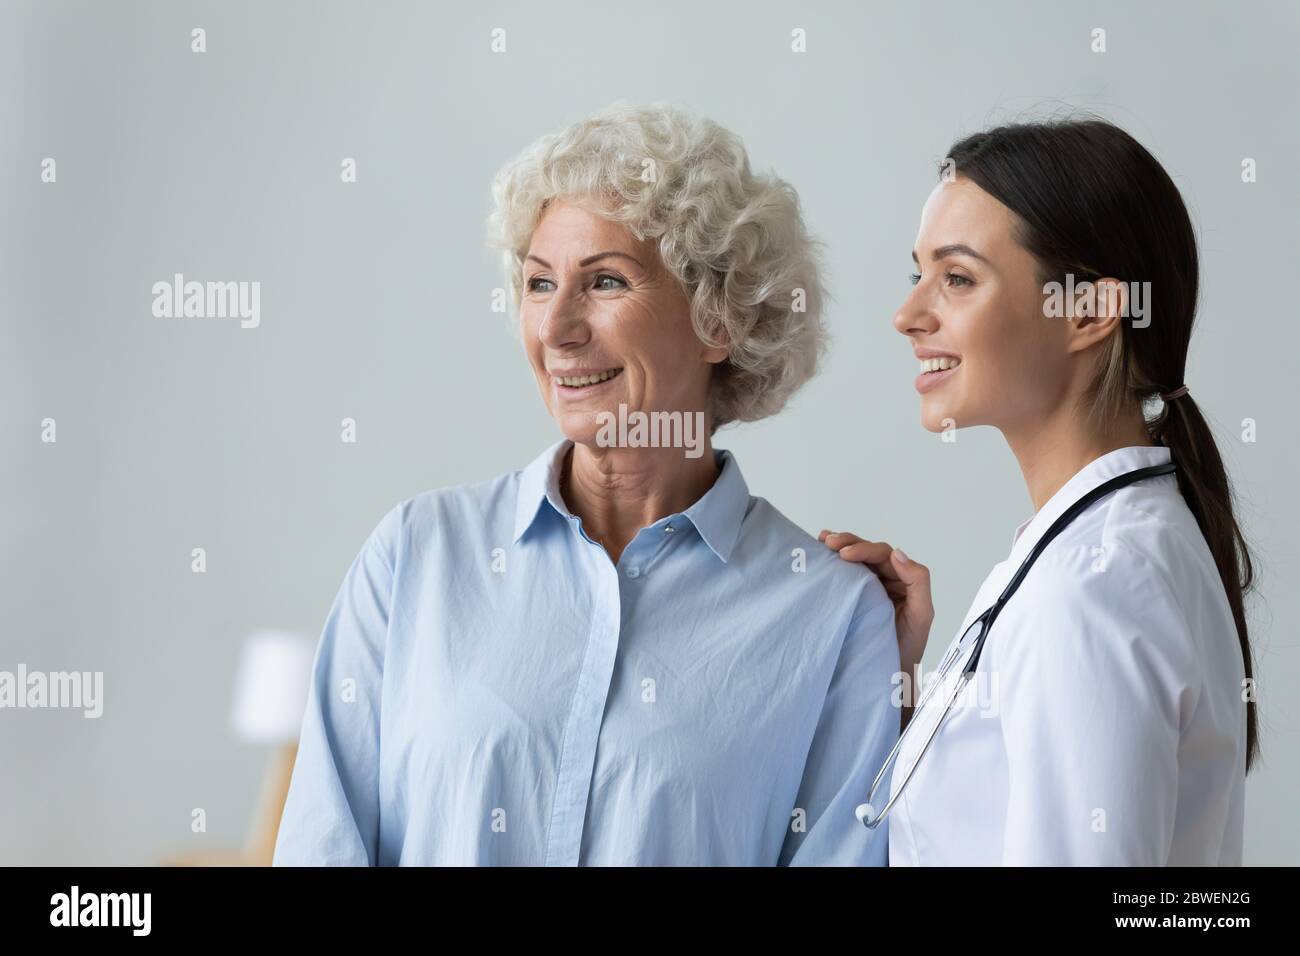 Nurse puts hand on shoulder of elderly patient showing care Stock Photo